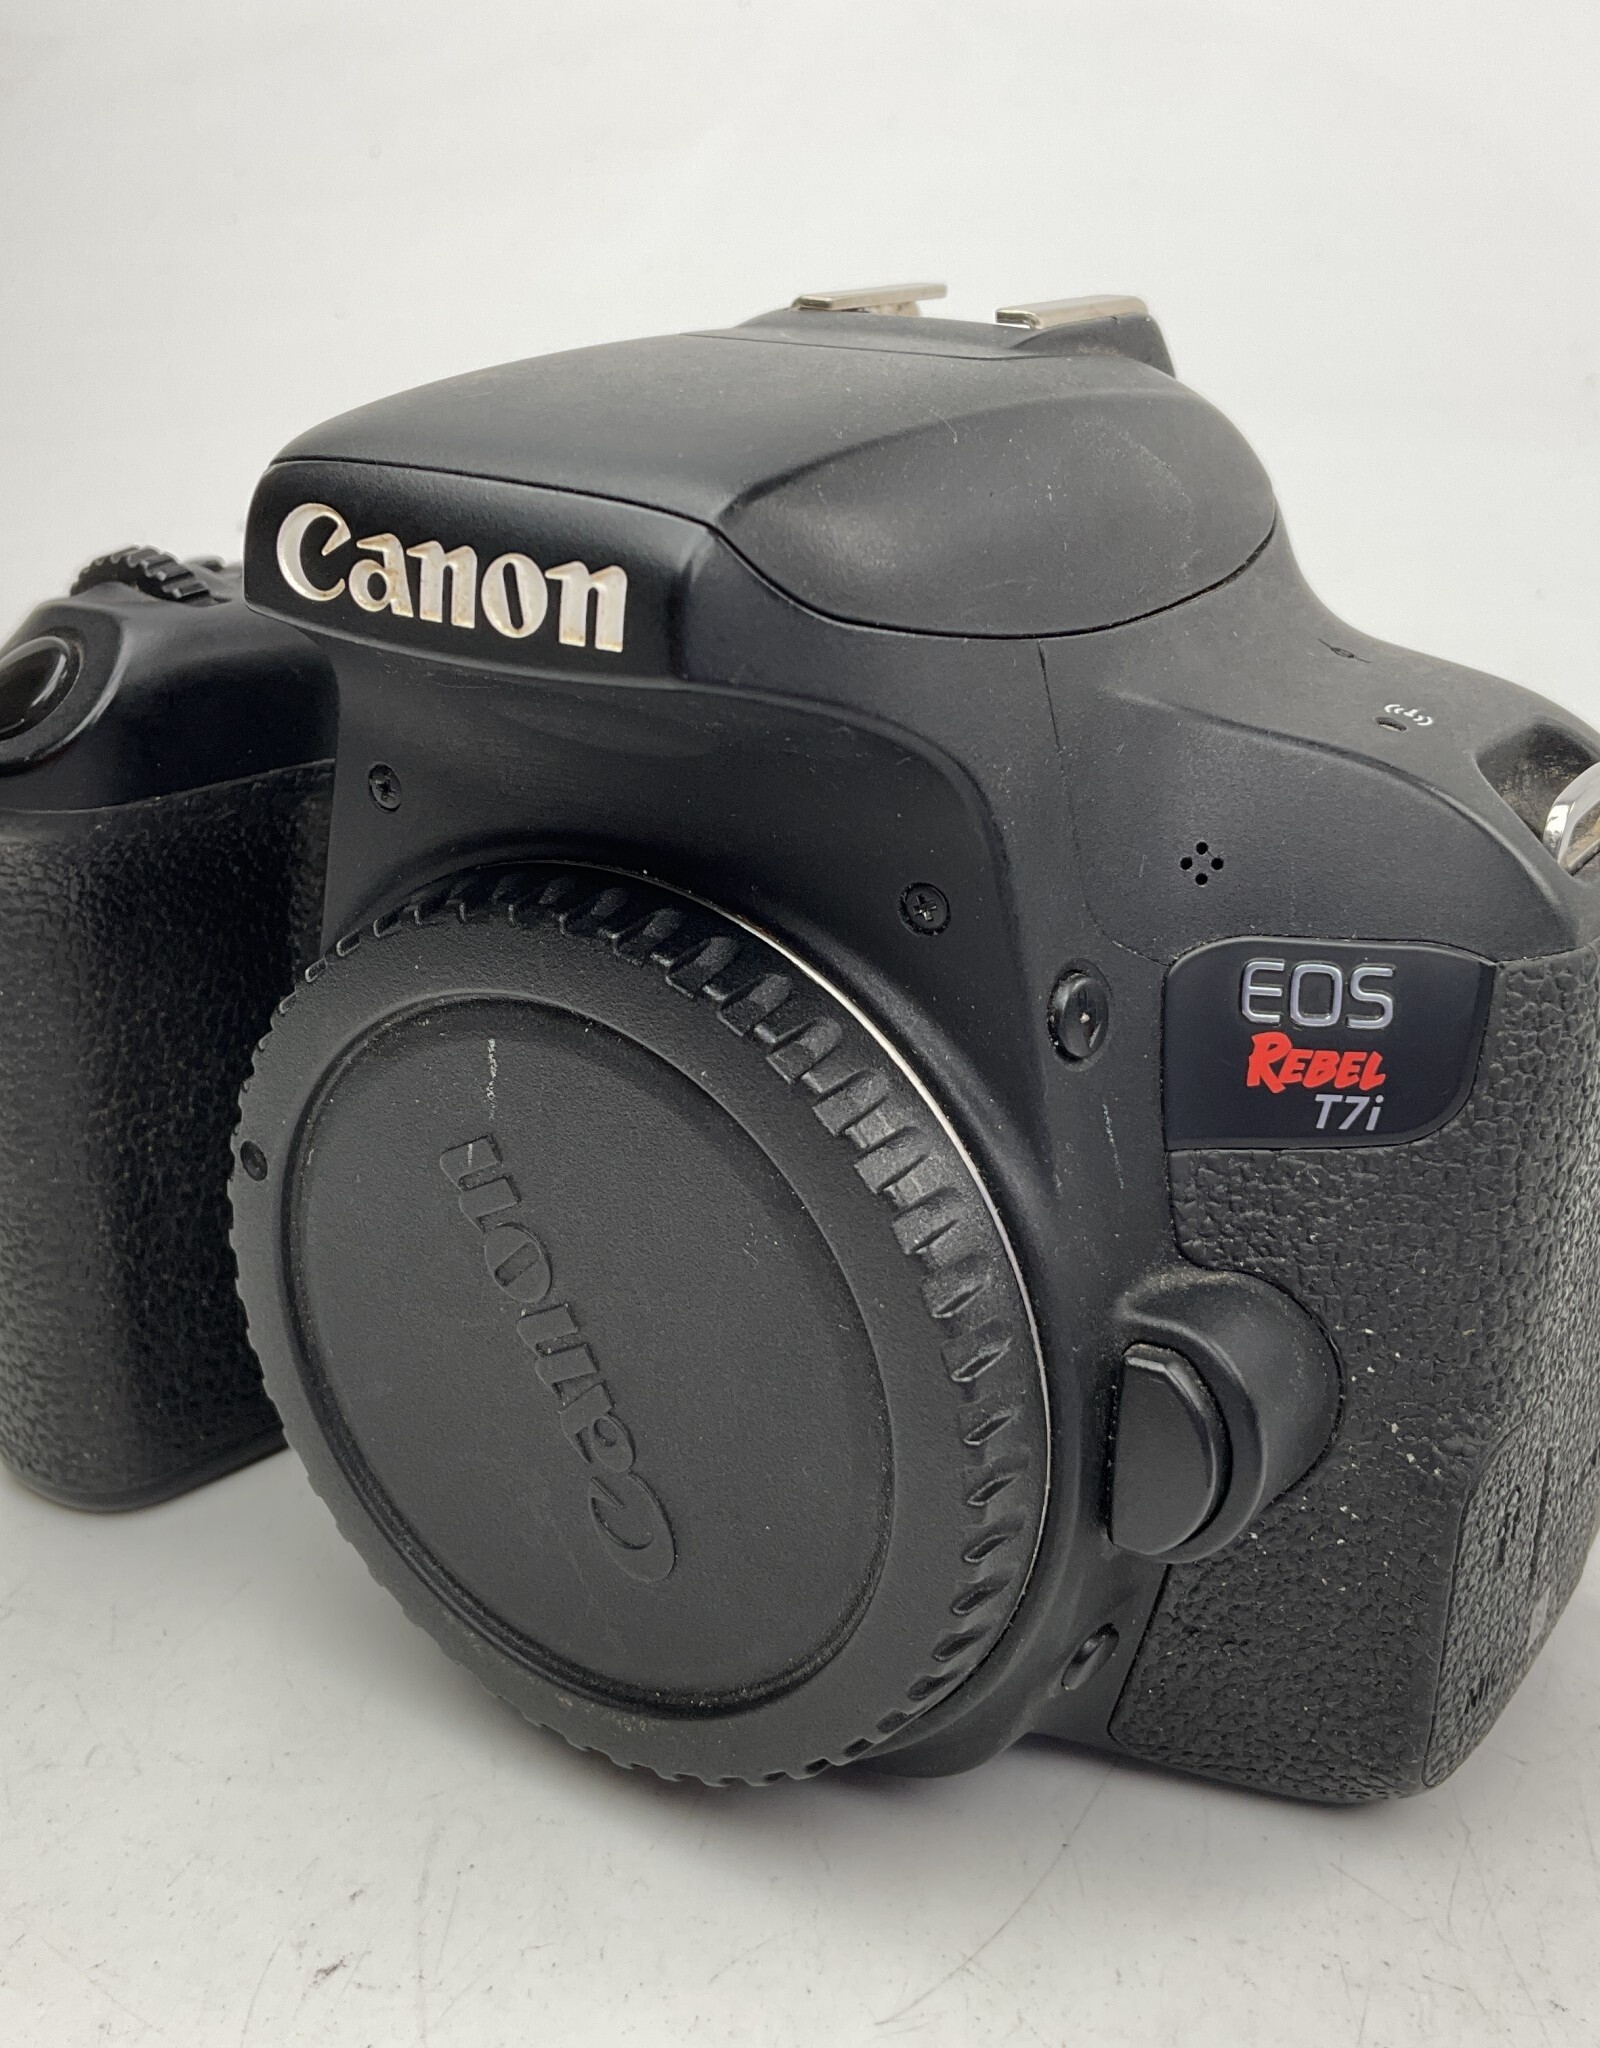 CANON Canon EOS Rebel T7i Camera Body No Charger Used Fair